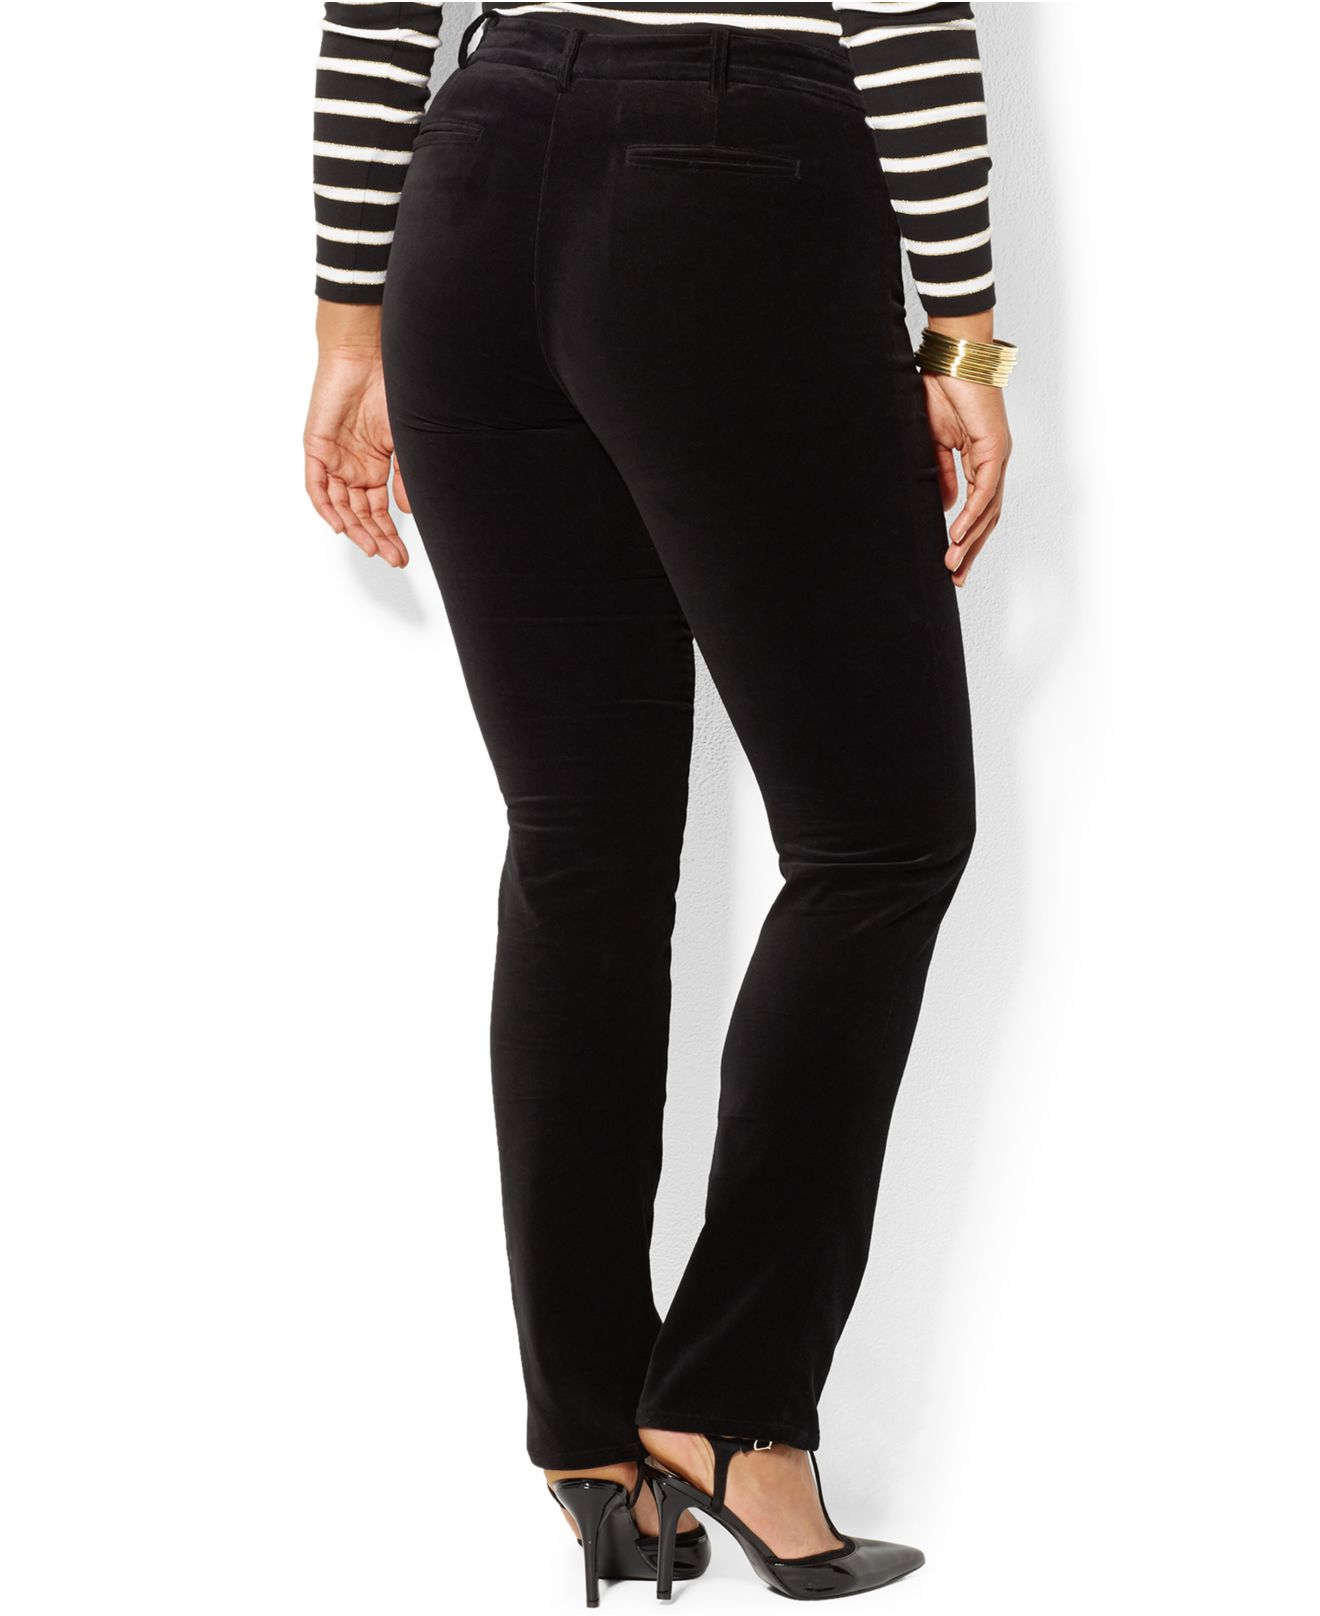 Lyst - Lauren By Ralph Lauren Plus Size Stretch Velvet Skinny Pants in